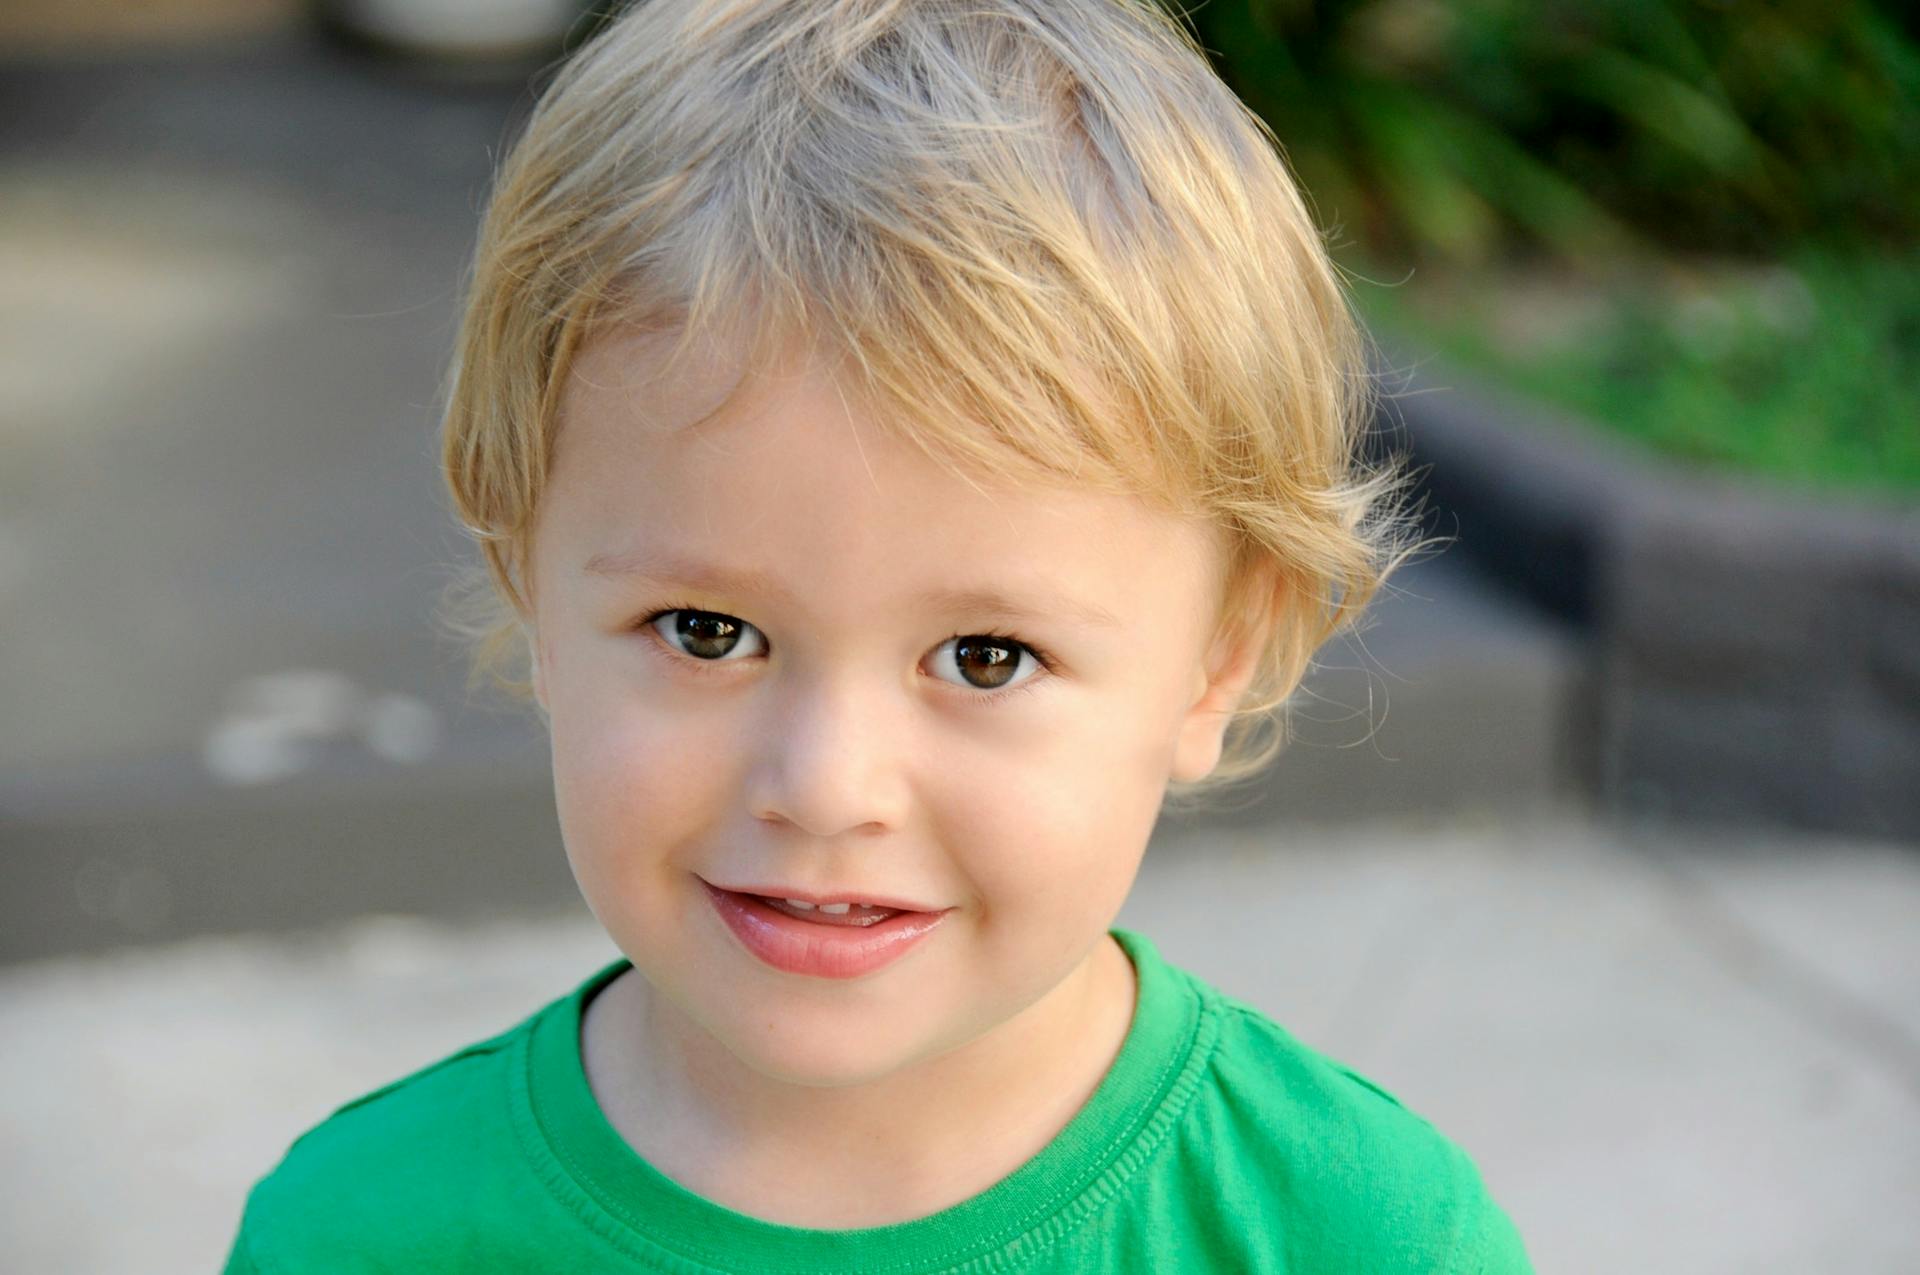 A smiling little boy | Source: Pexels